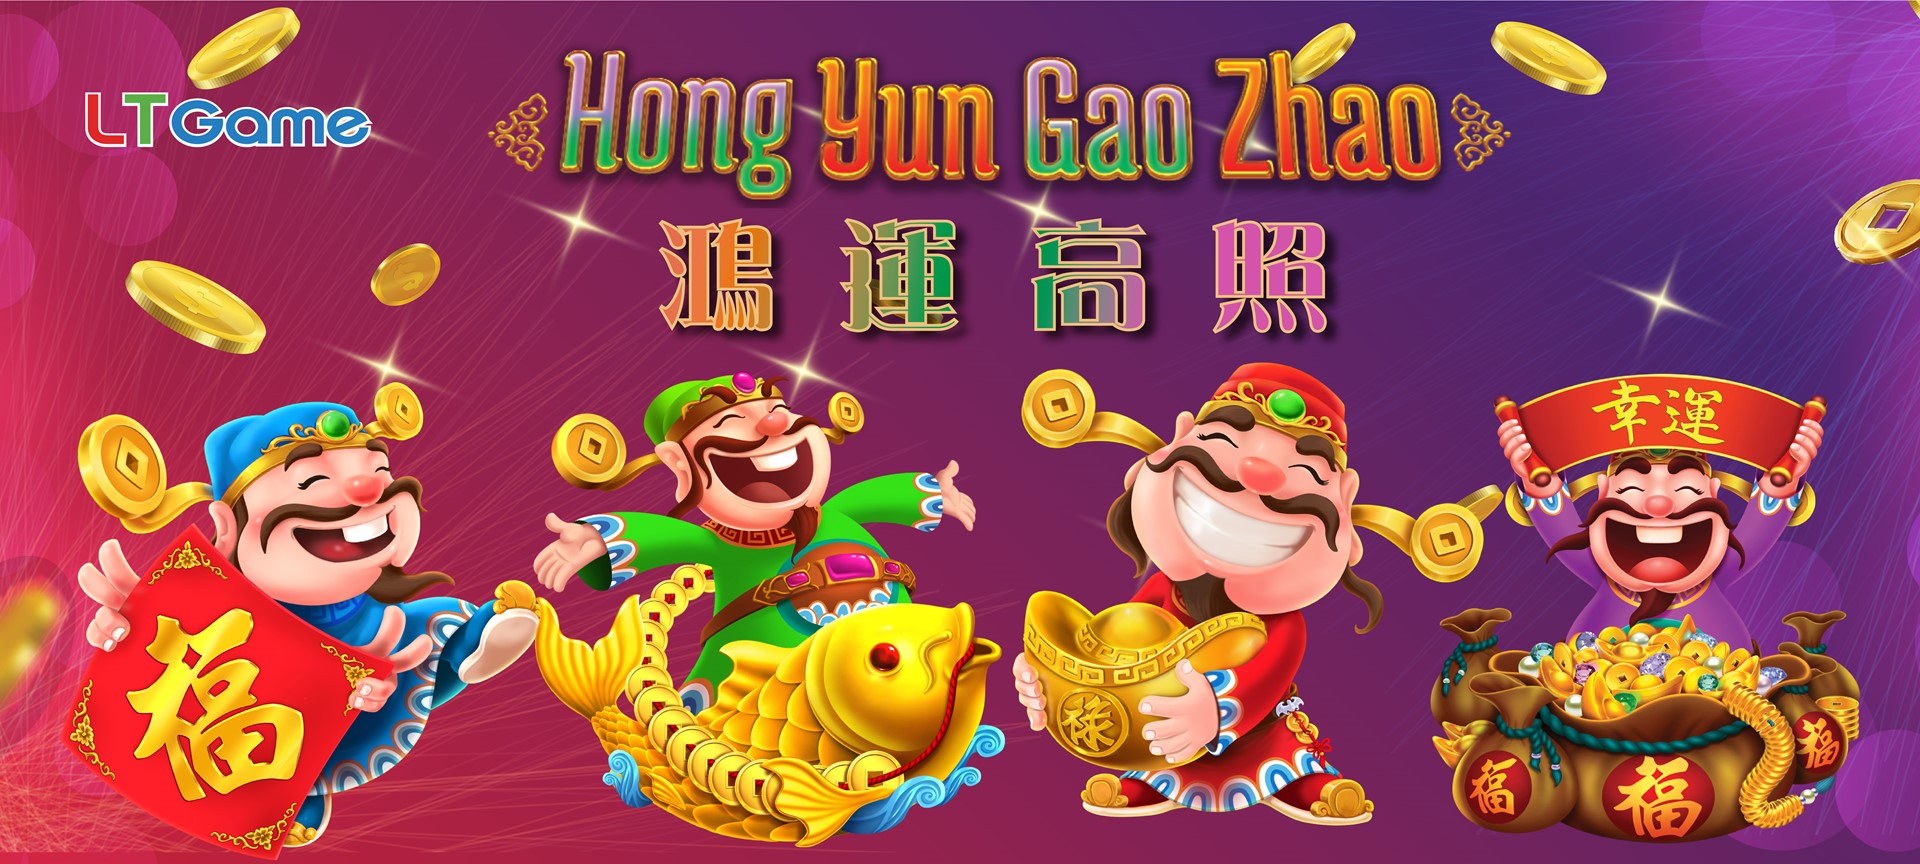 Macau Gaming Equipment Manufacturers Association